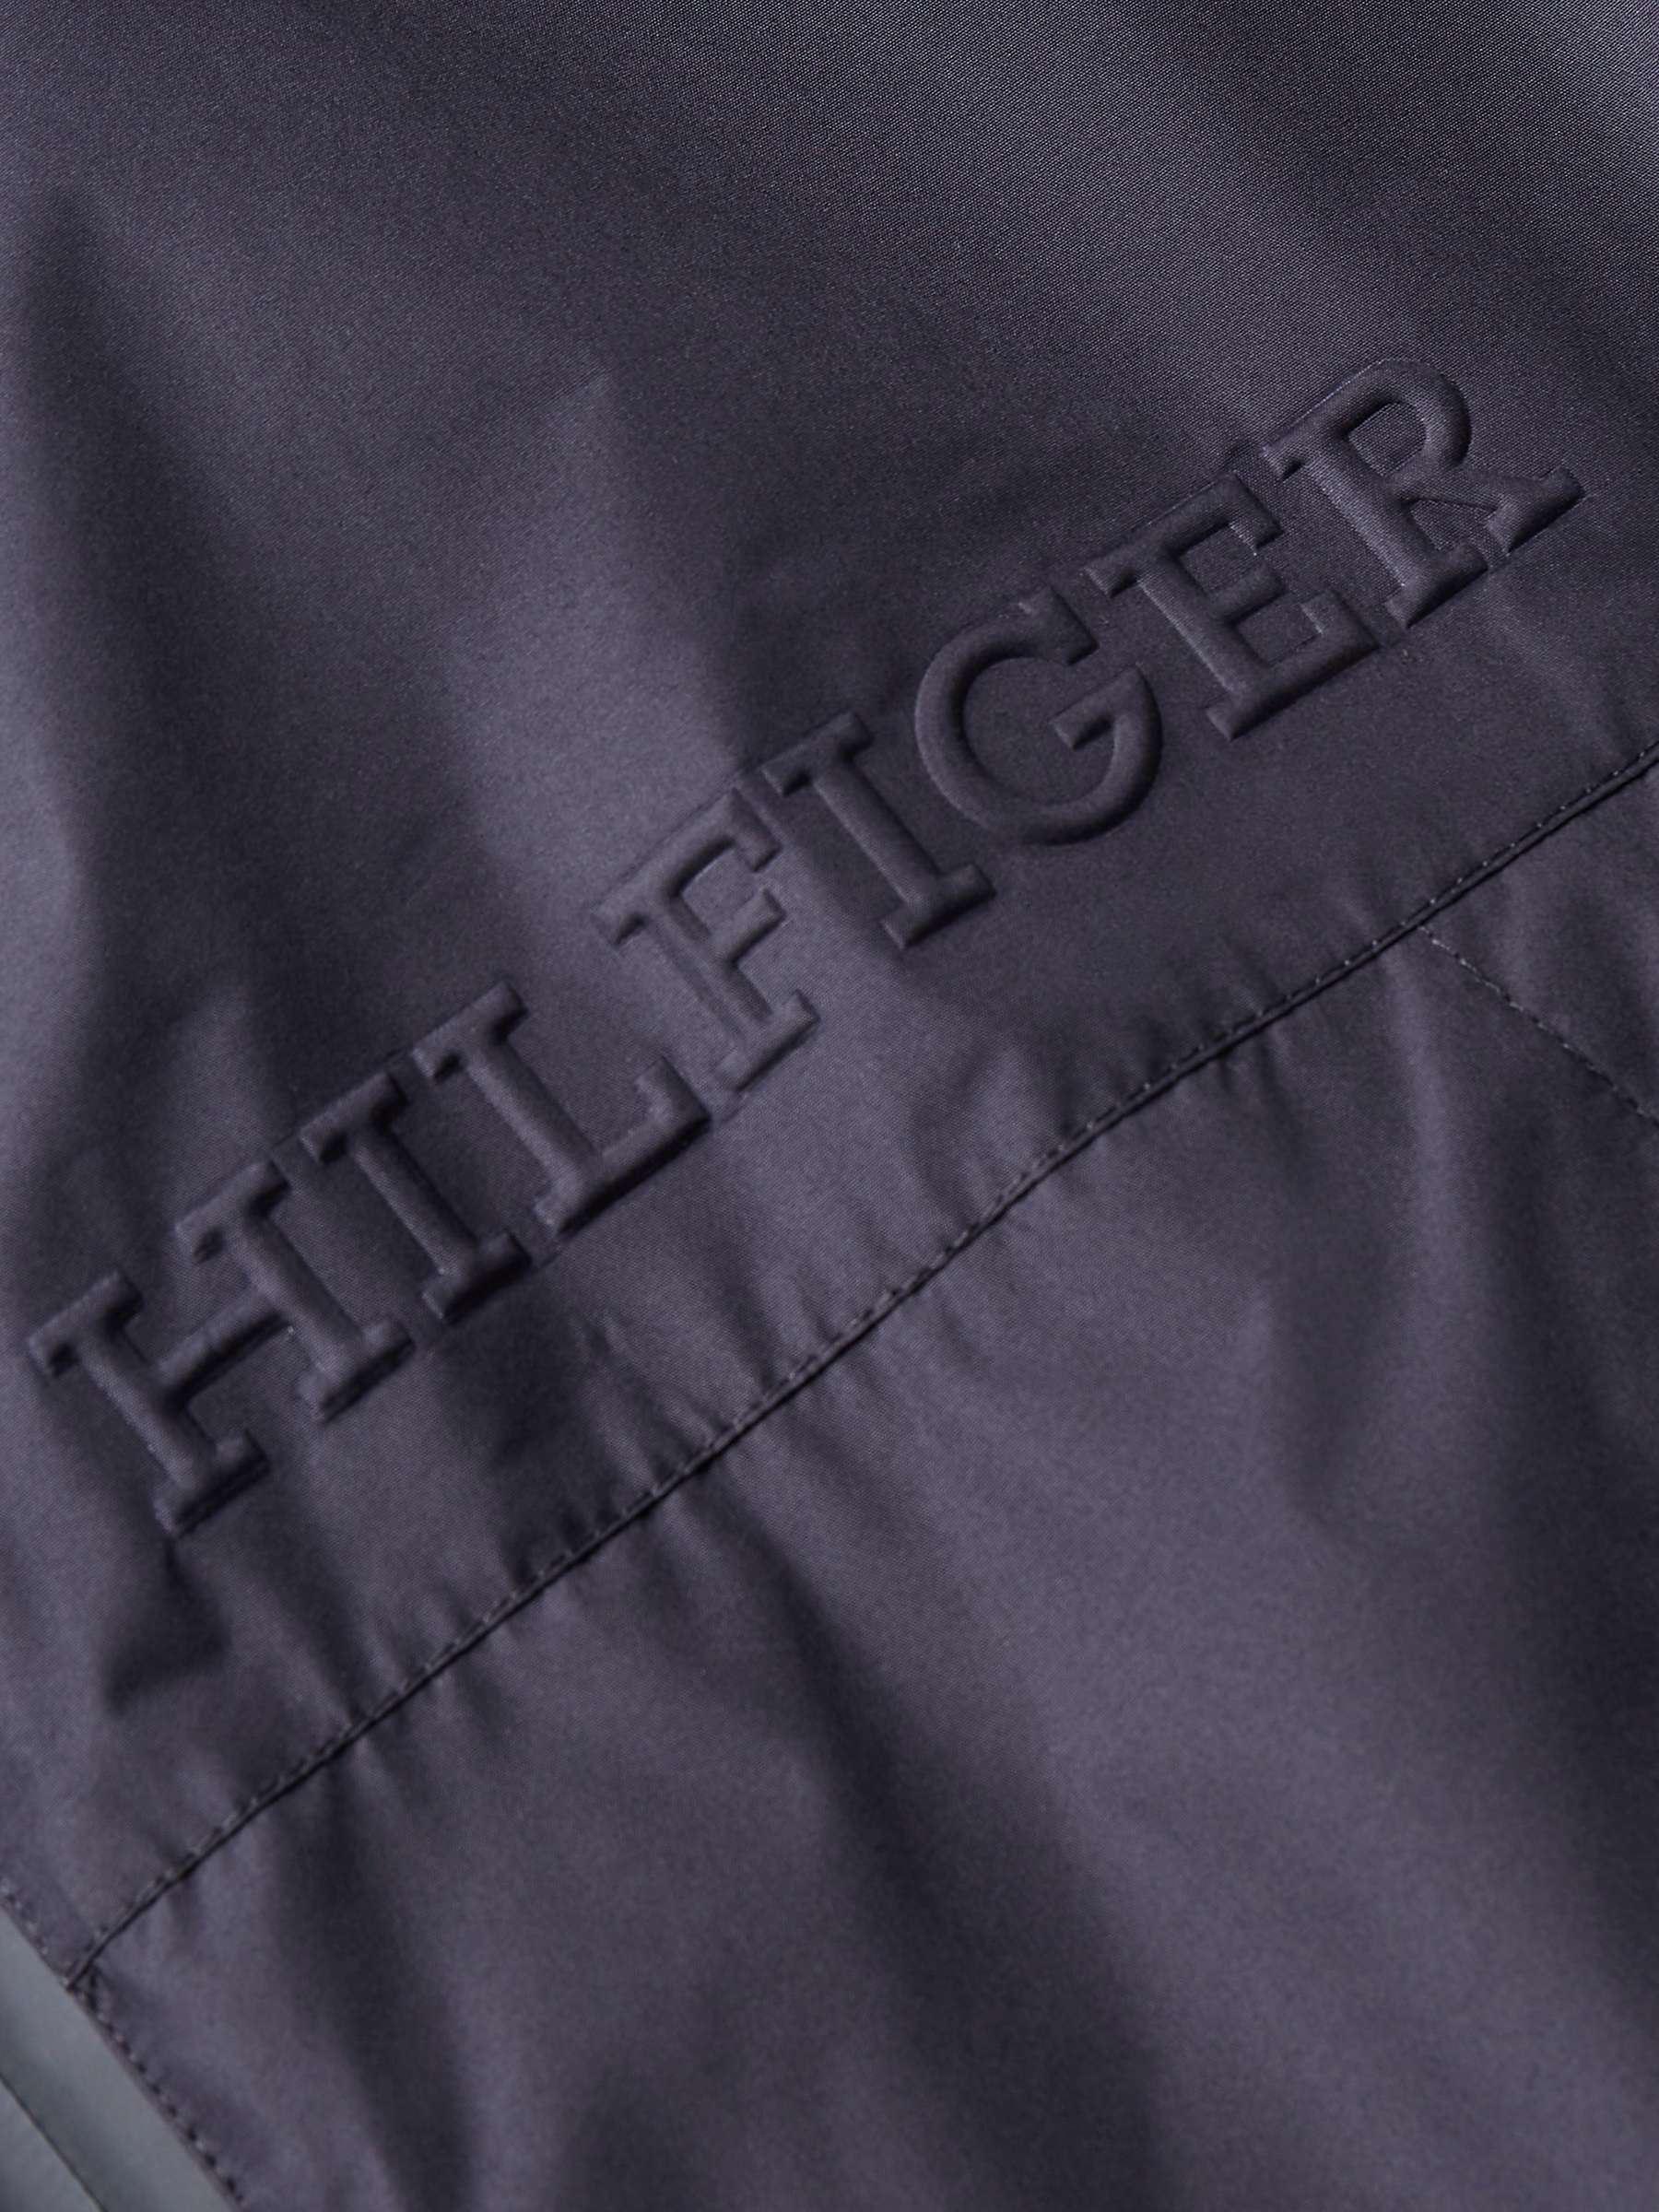 Buy Tommy Hilfiger B&T Portland Windbreaker Jacket, Desert Sky Online at johnlewis.com